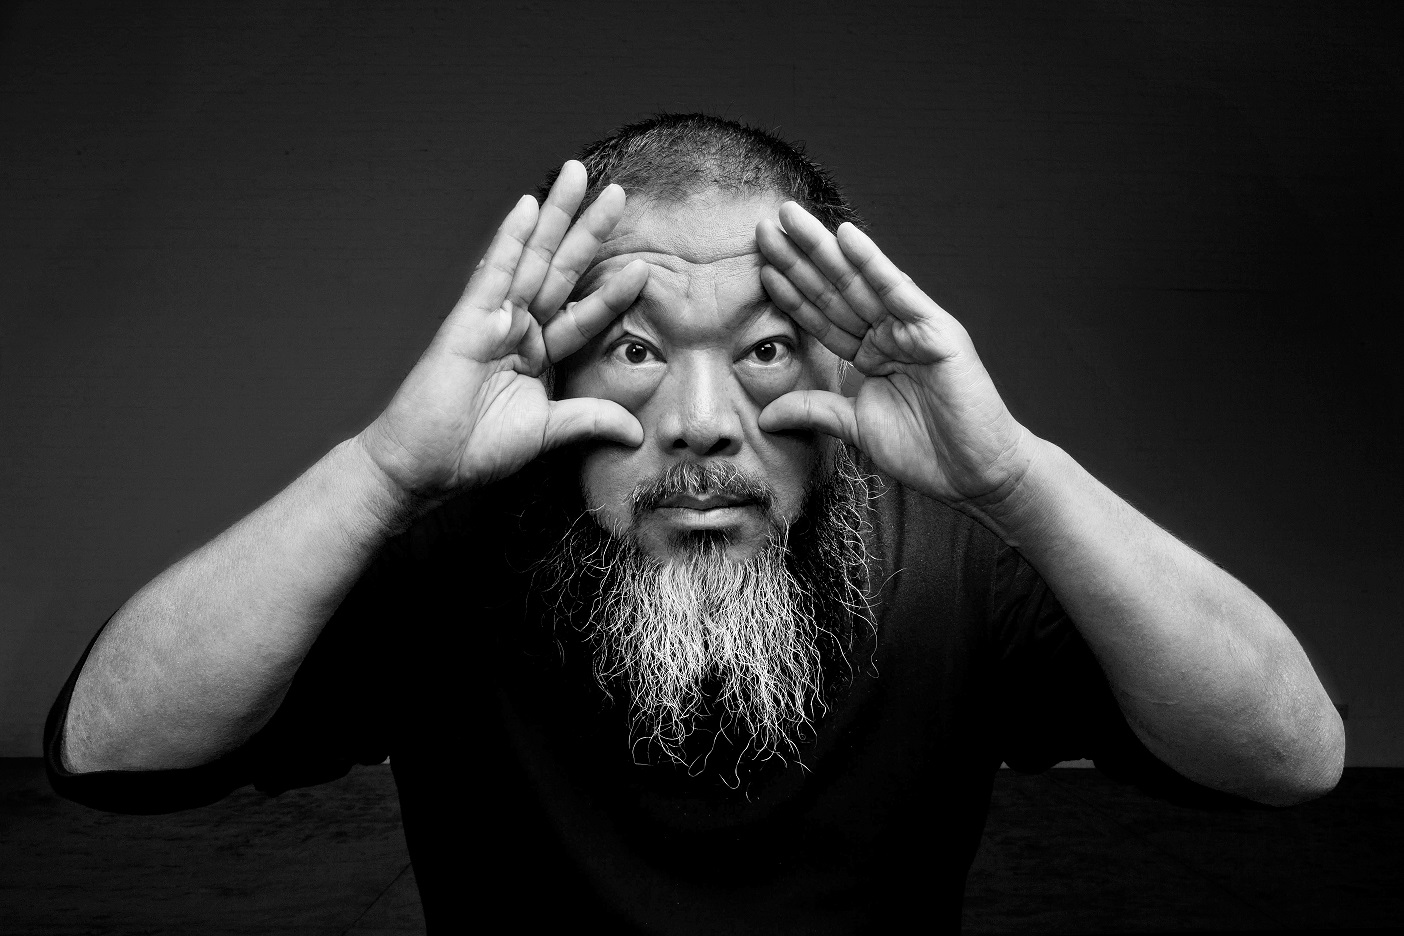 Celebrated Chinese Dissident Artist Ai Weiwei Brings Exhibit To St Louis Gazelle Magazine